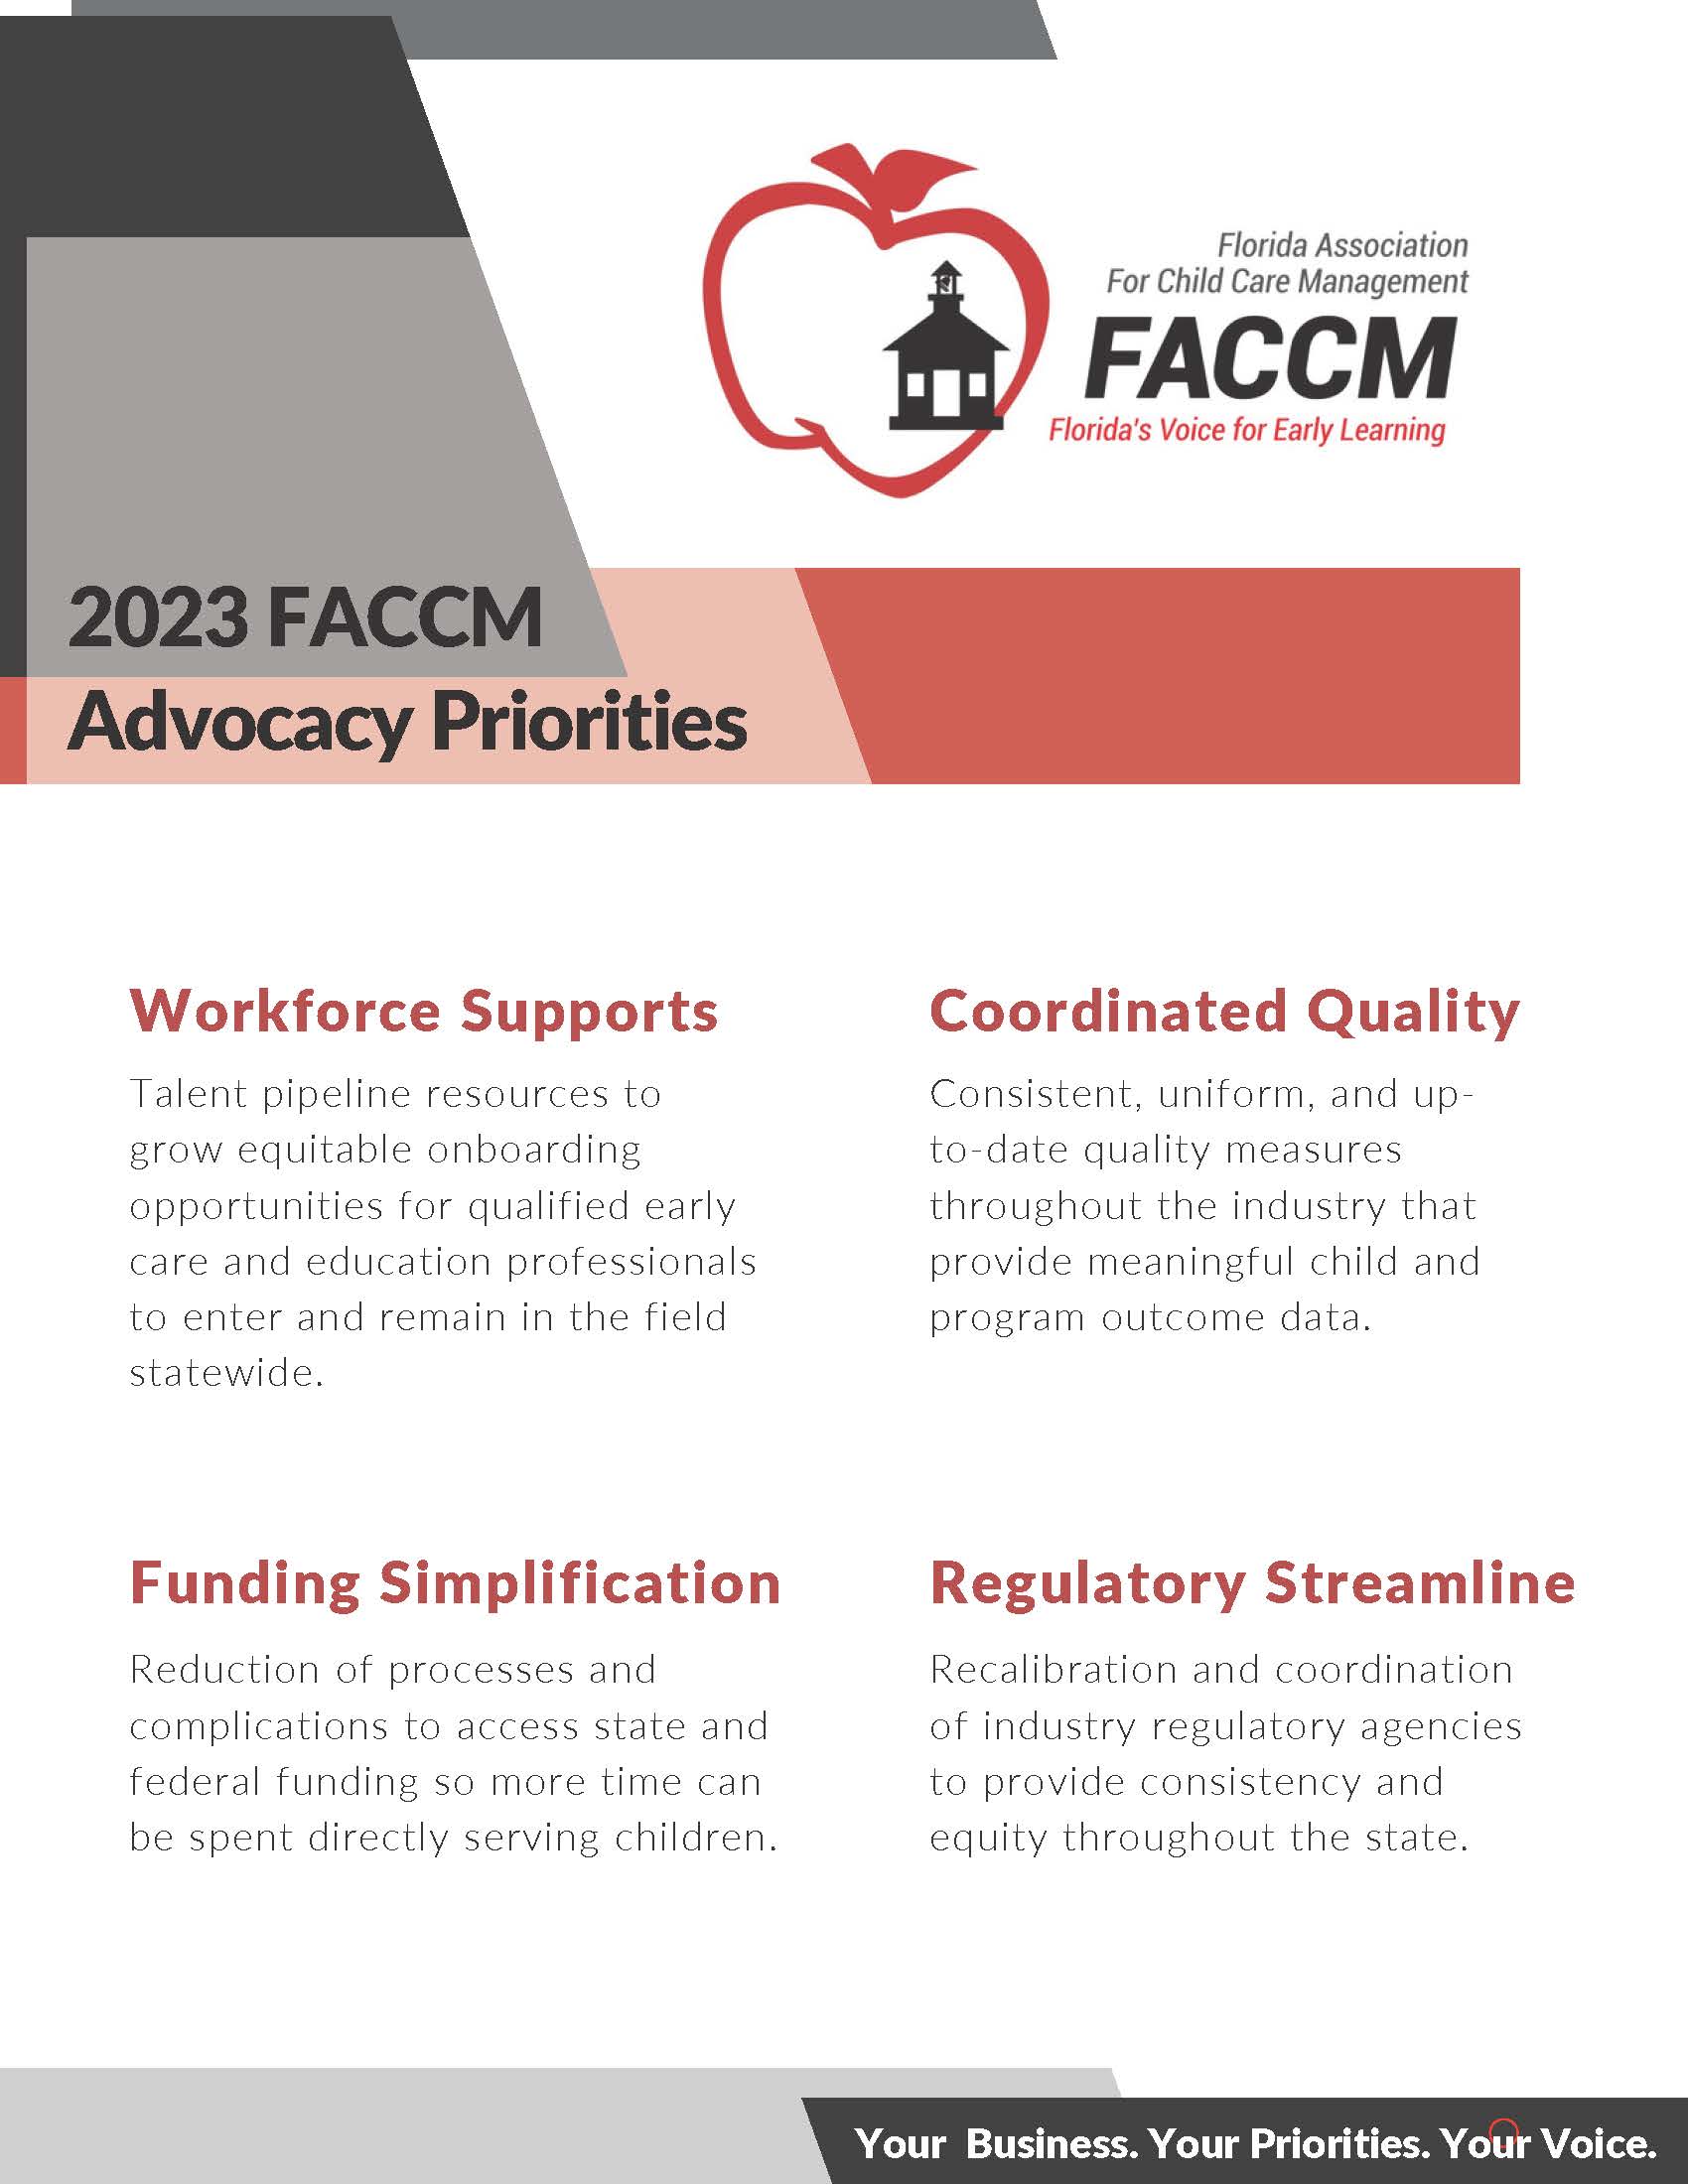 2023 FACCM Advocacy Priorities